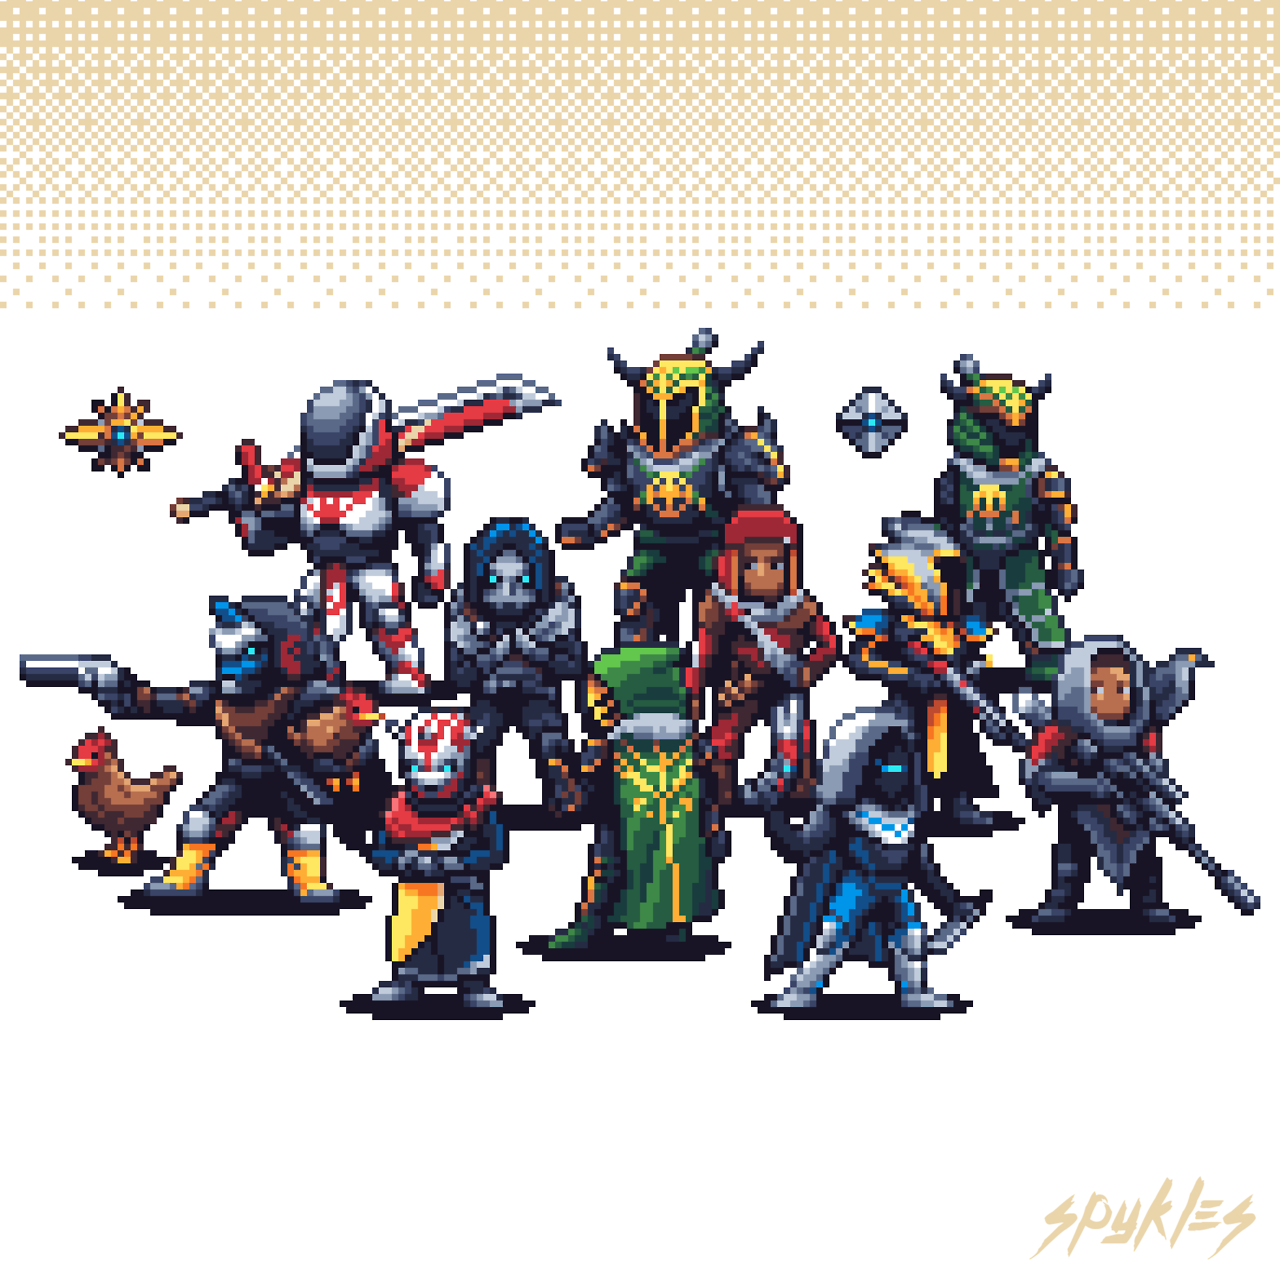 All my Destiny 2 Pixel Art characters so far. - Spykles